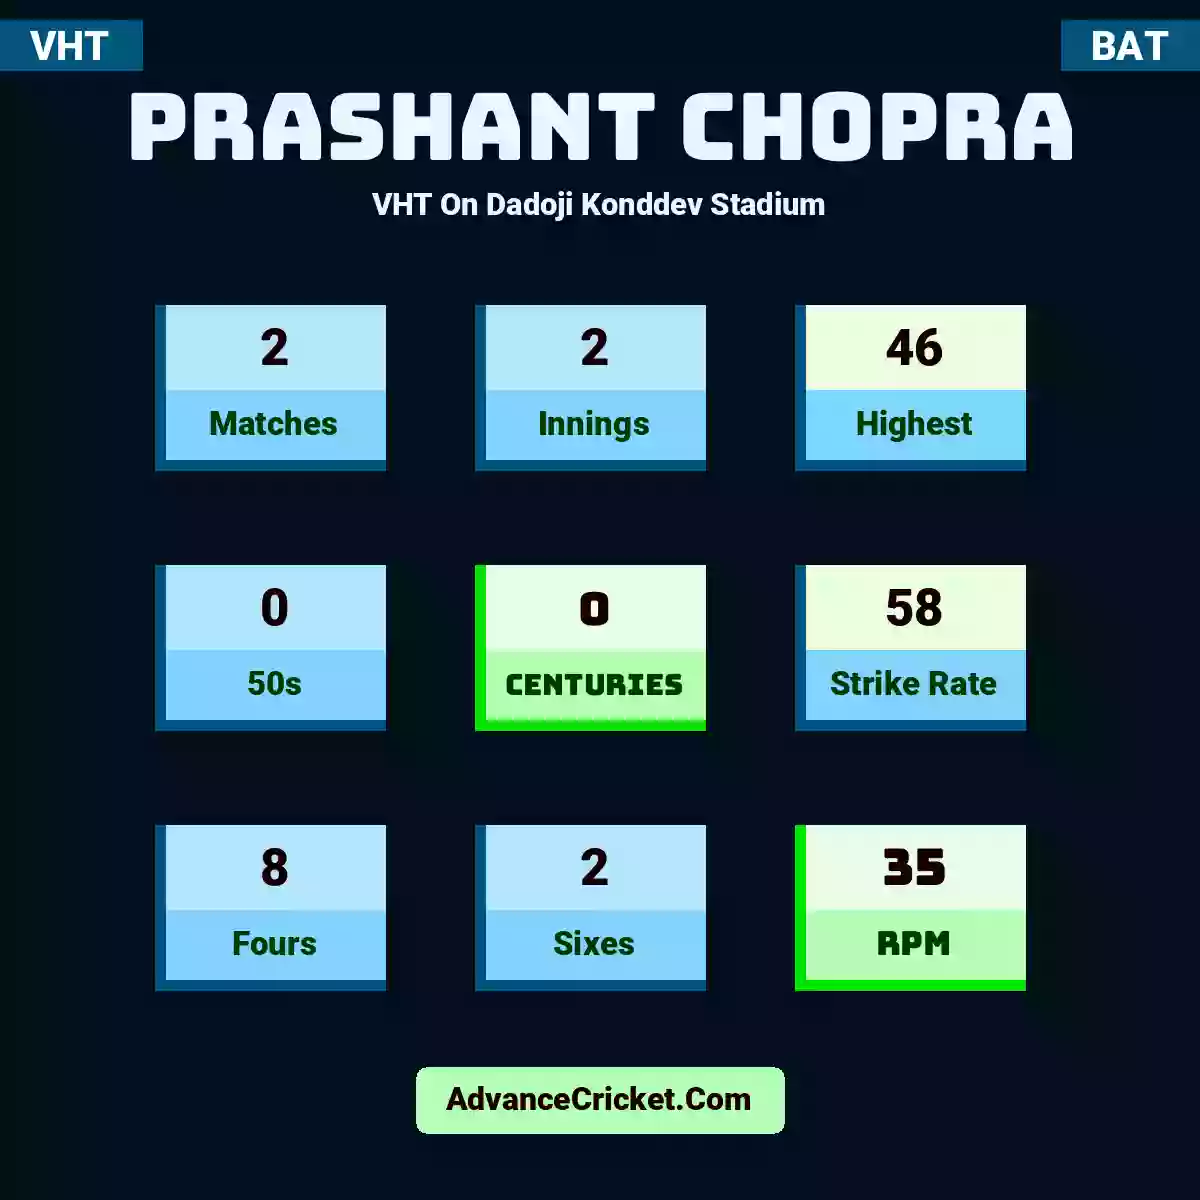 Prashant Chopra VHT  On Dadoji Konddev Stadium, Prashant Chopra played 2 matches, scored 46 runs as highest, 0 half-centuries, and 0 centuries, with a strike rate of 58. P.Chopra hit 8 fours and 2 sixes, with an RPM of 35.